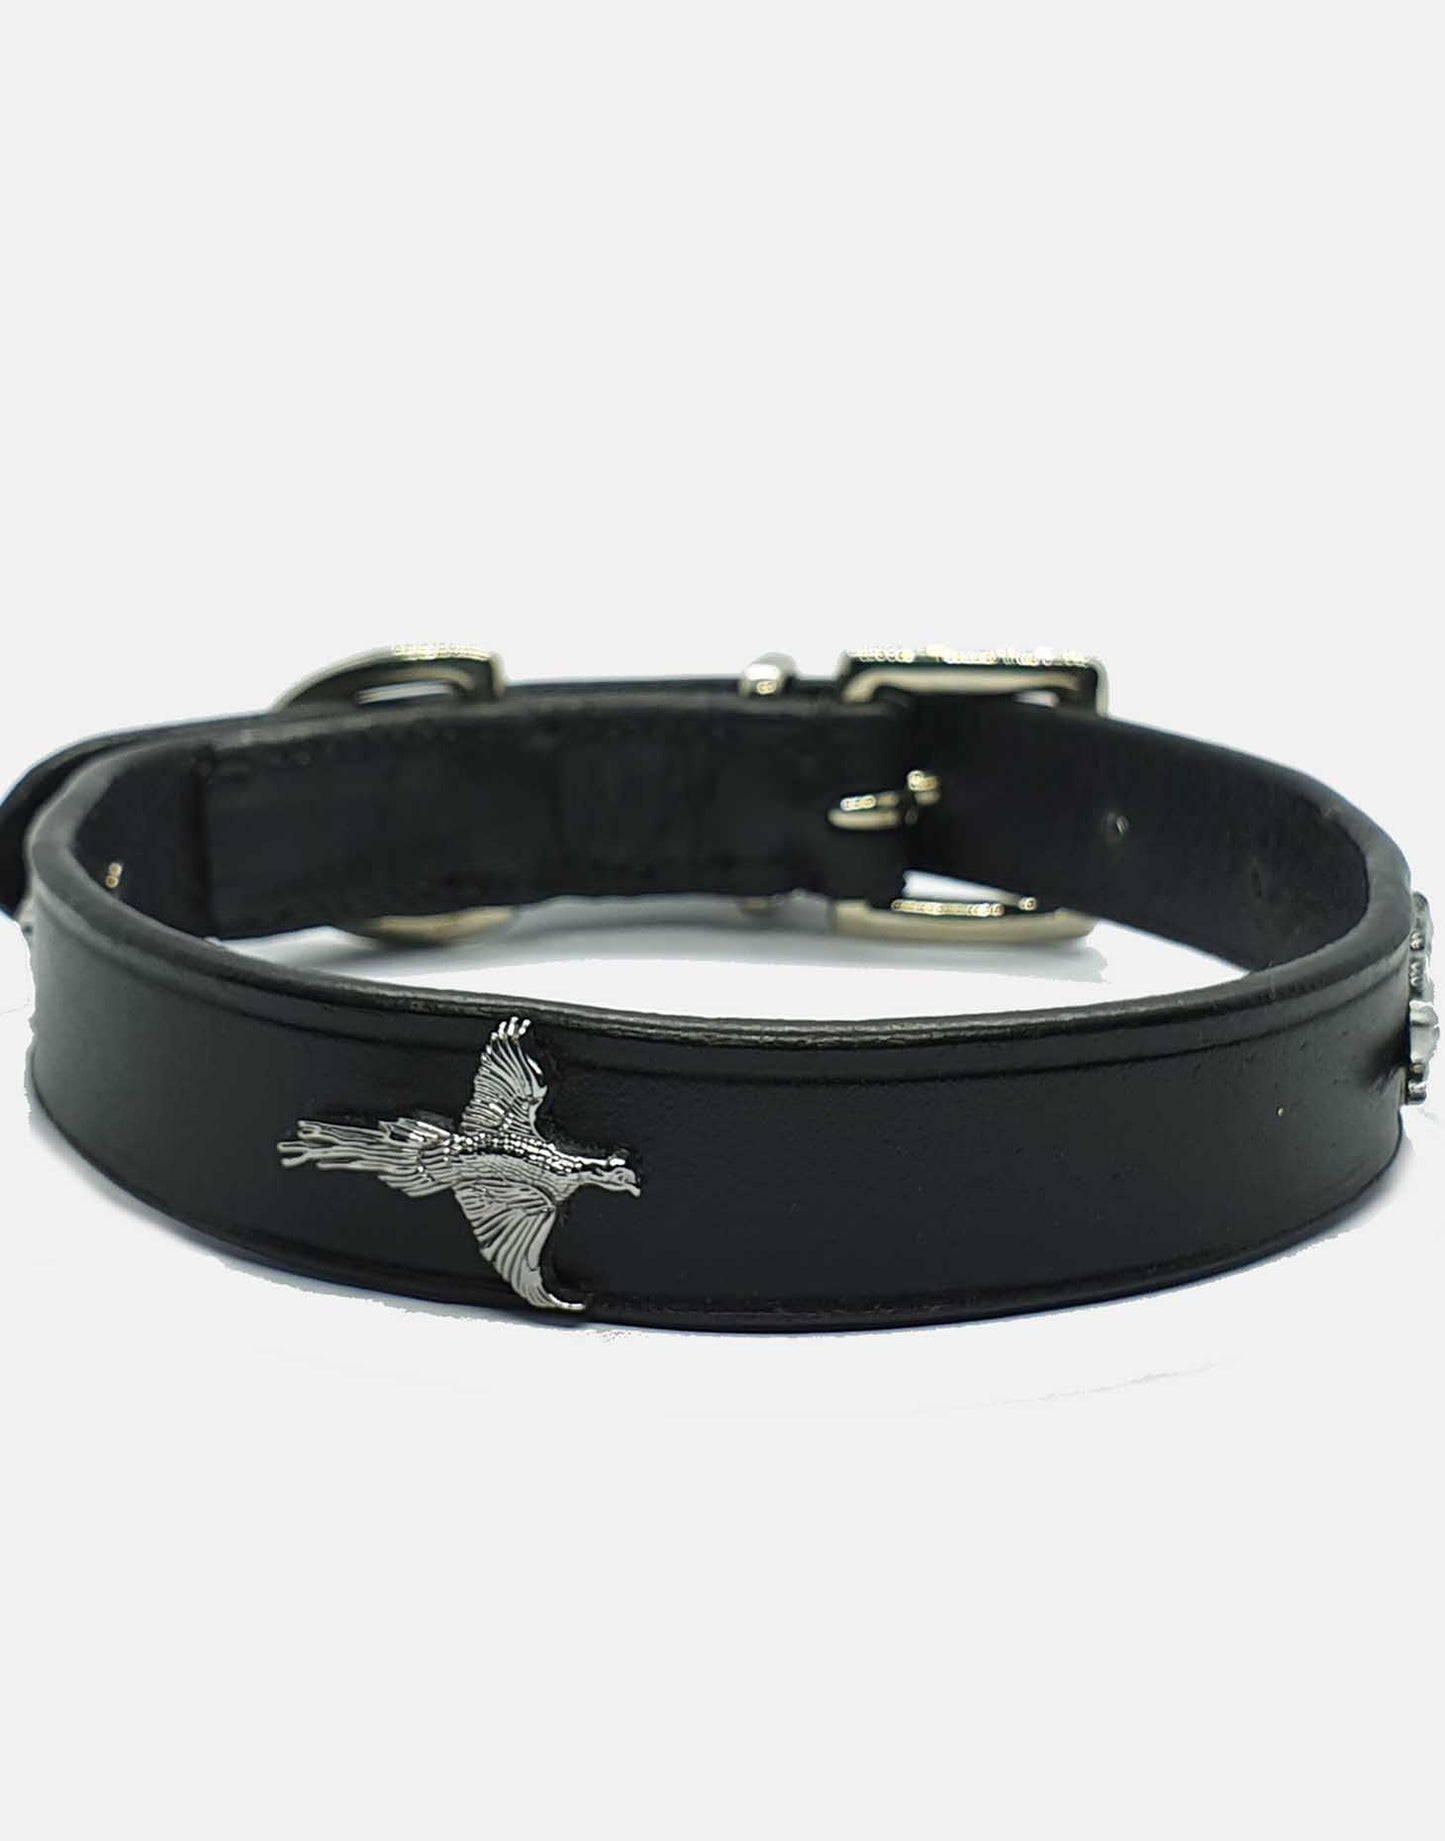 'The Blenheim' Silver Pheasants & Black Leather Dog Collar